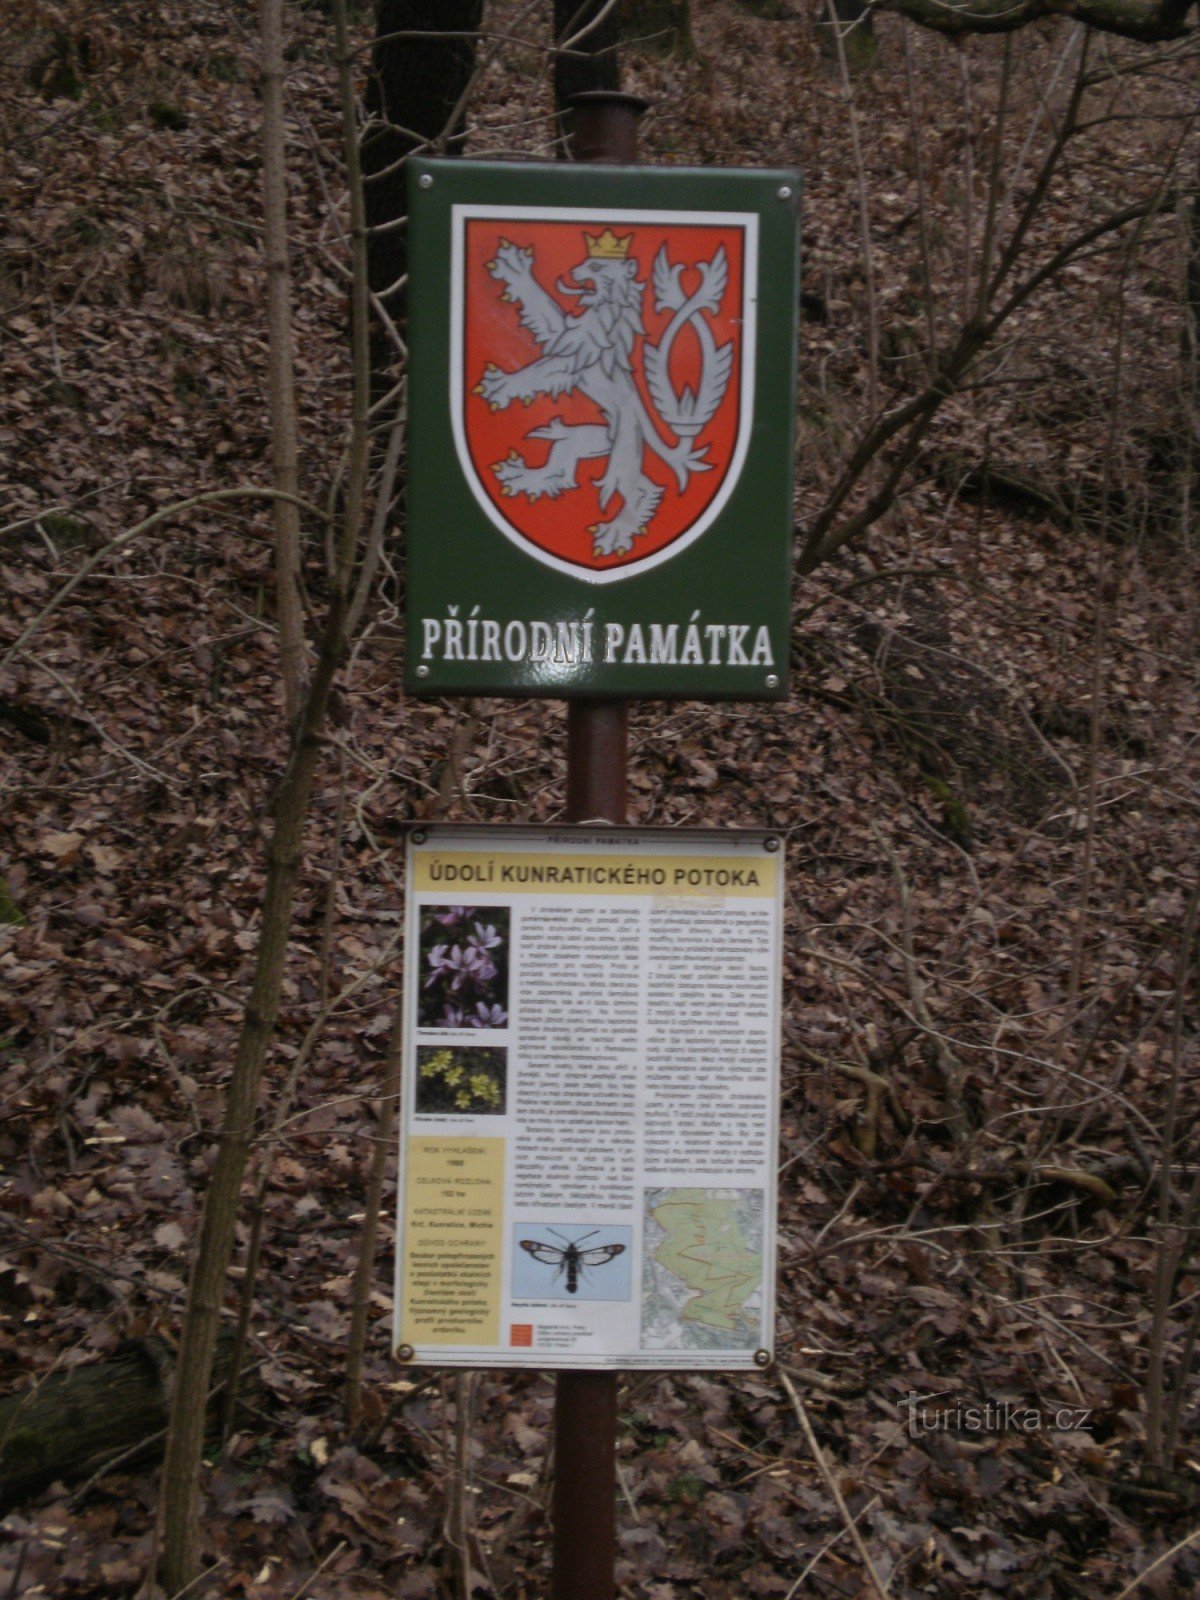 Okoli gozda Kunratic